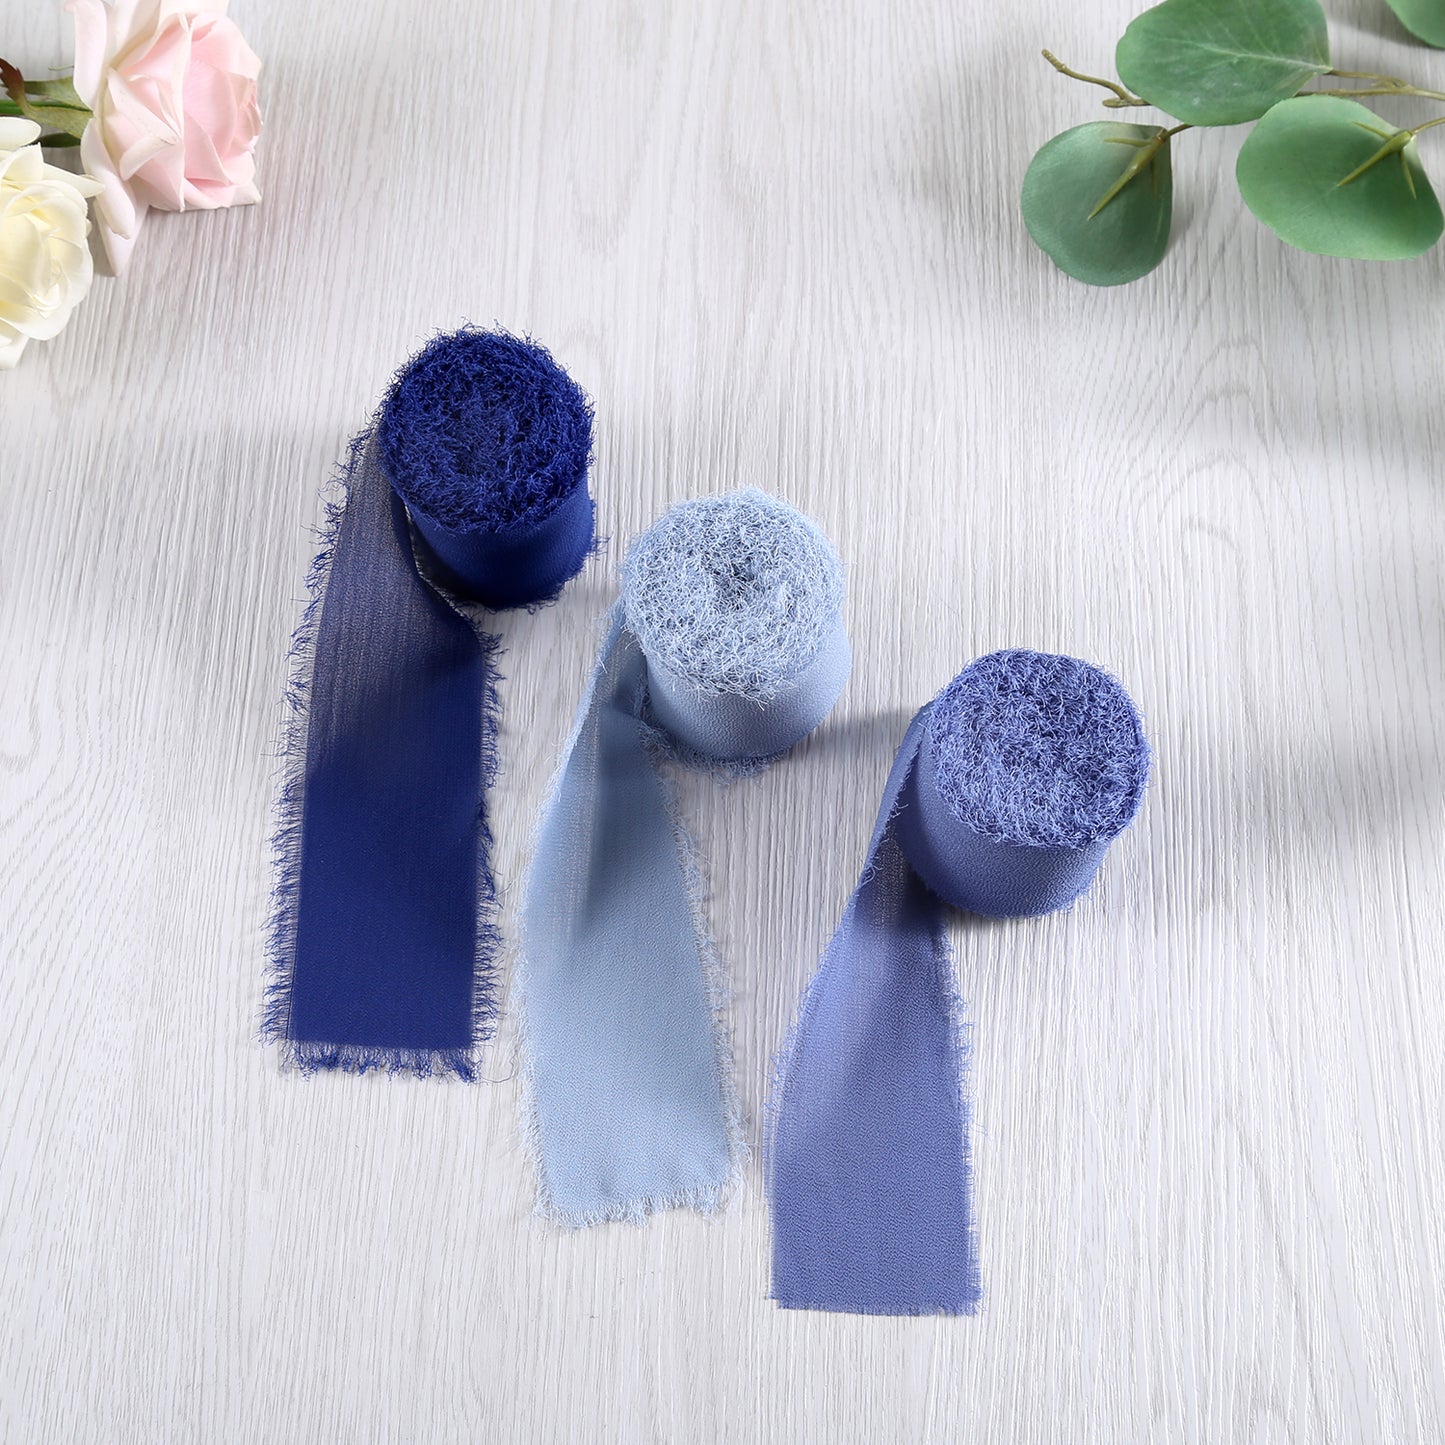 Handmade Fringe Chiffon Silk-Like Ribbon 2" x 7Yd Set of 3 Rolls Ribbons for Wedding Invitations, Bouquets, Gift Wrapping (3 Rolls Navy Blue/Crayola Blue/Dusty Blue)